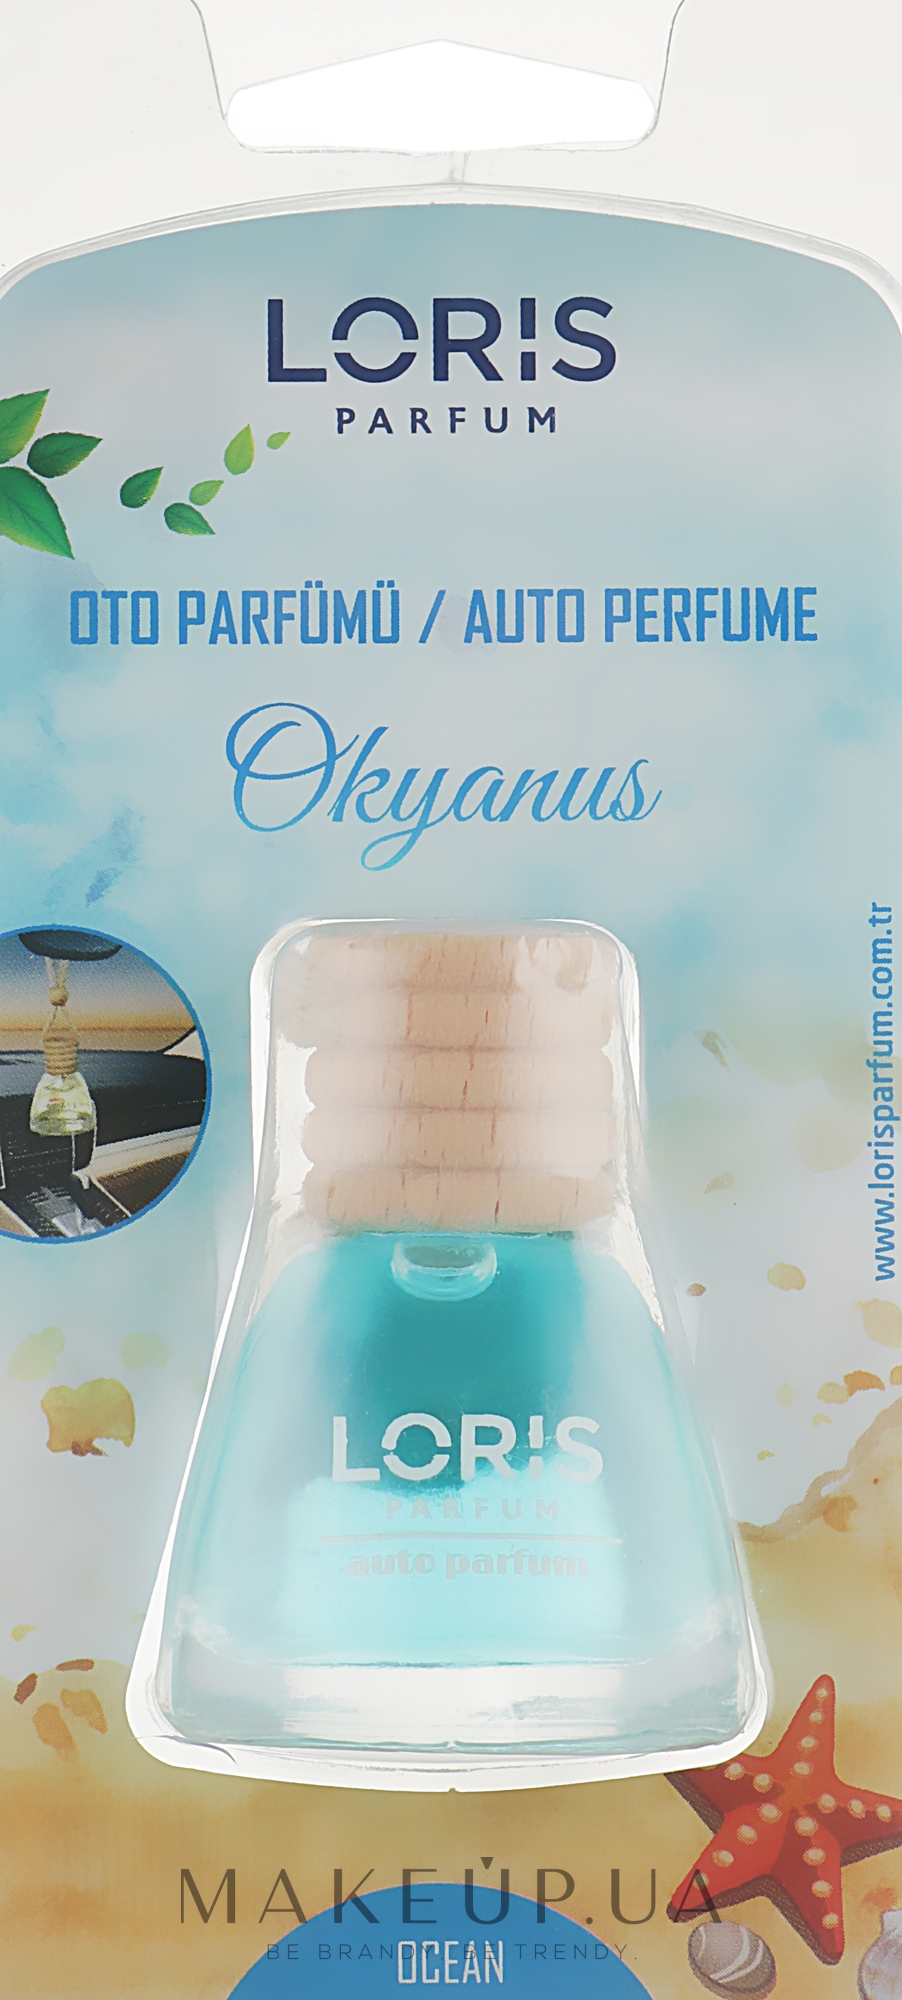 Аромаподвеска для автомобиля "Океан" - Loris Parfum  — фото 10ml